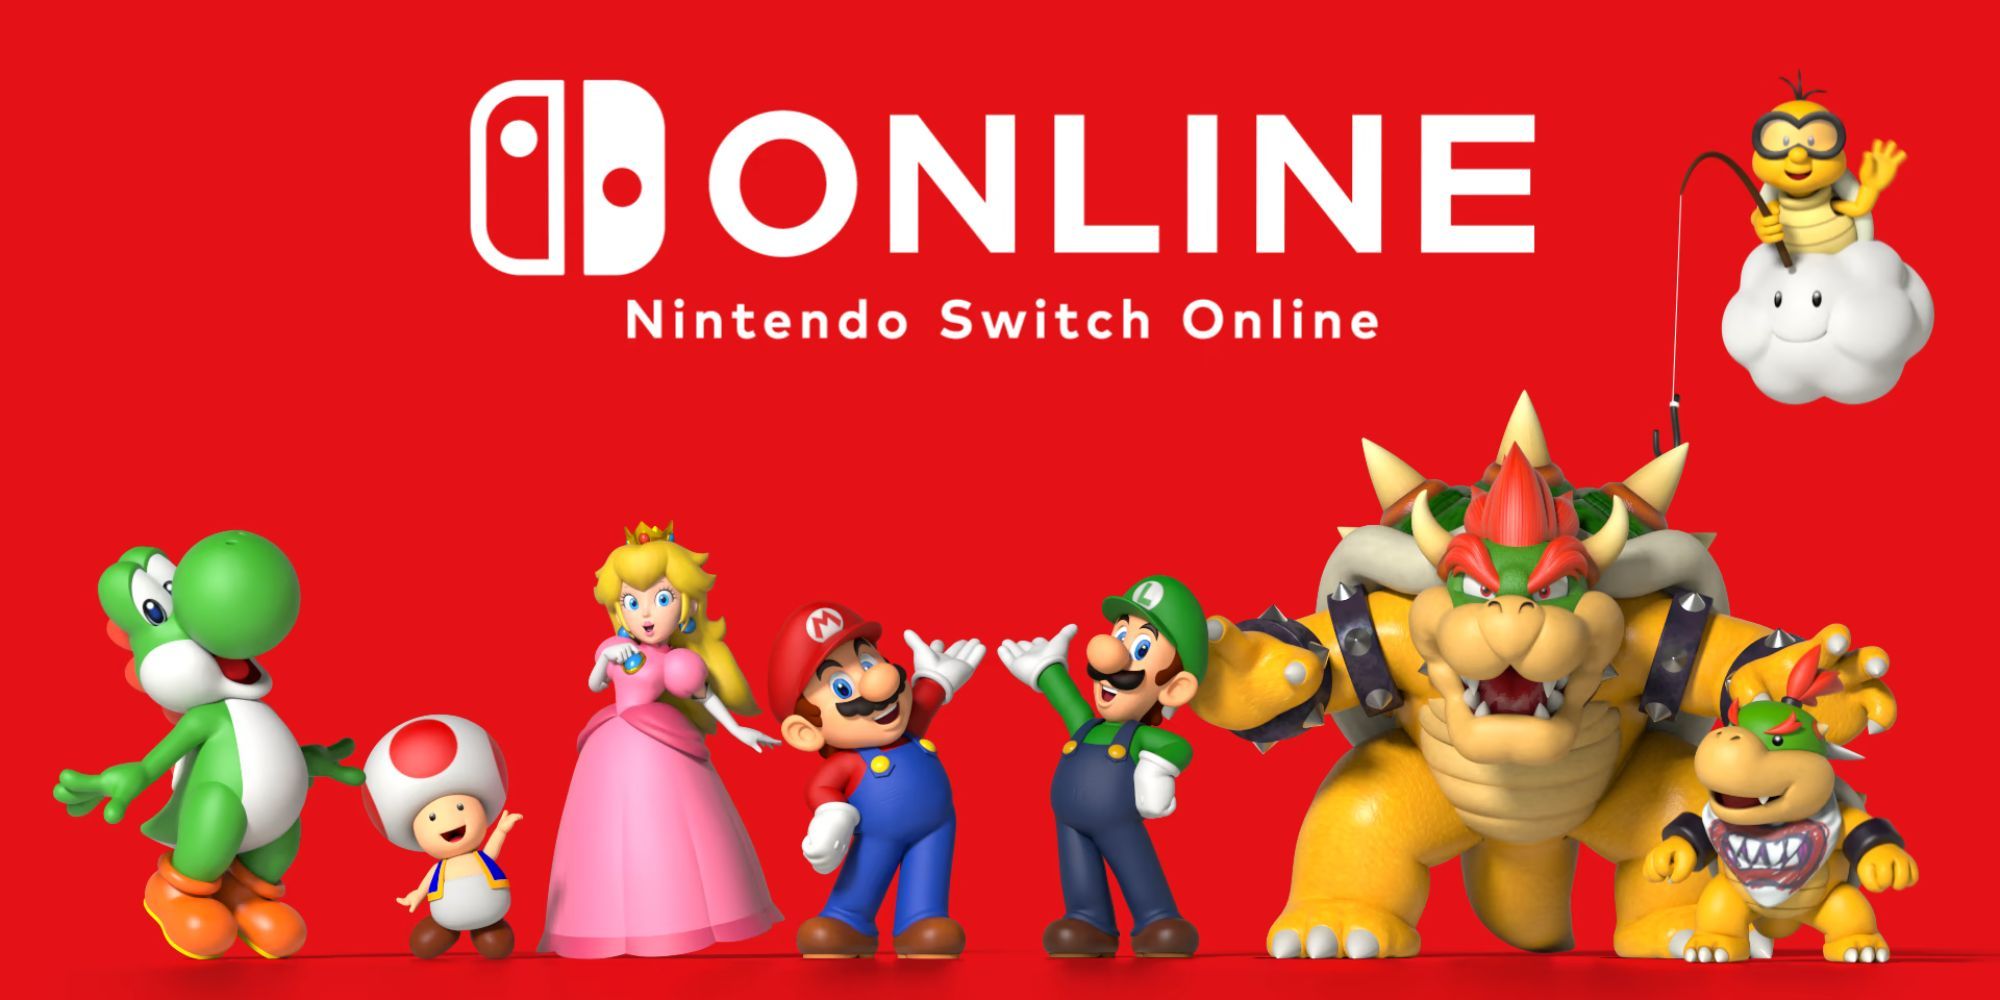 Nintendo Switch Online Yoshi, Toad, Peach, Mario, Luigi, Bowser, Bowser Jr., and Lakitu pose together